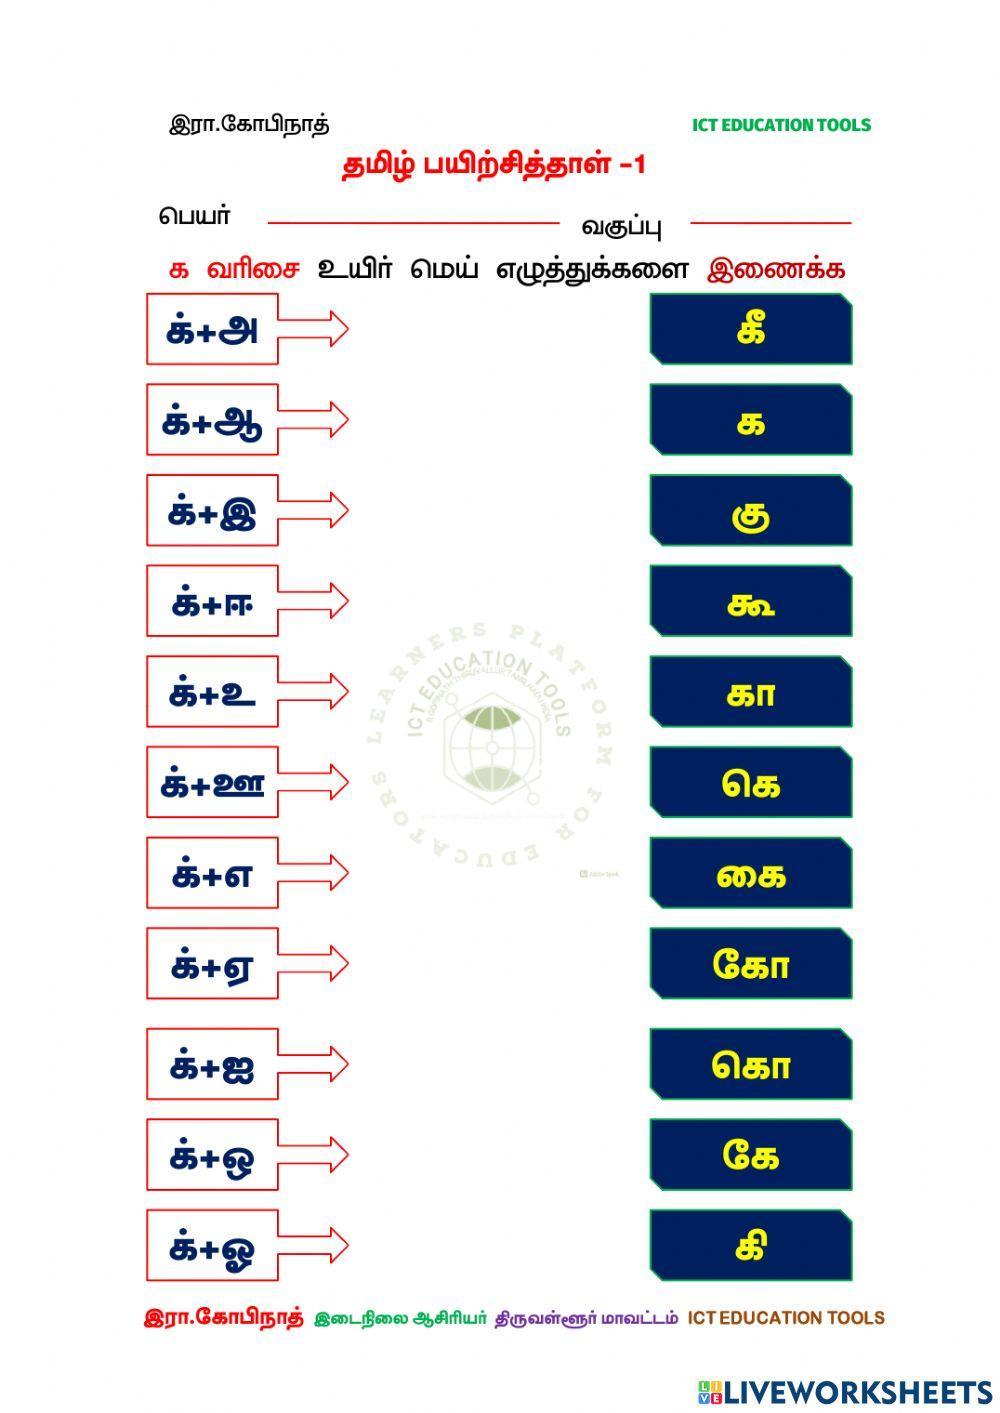 Ict education tools 3 tamil letters gopinath